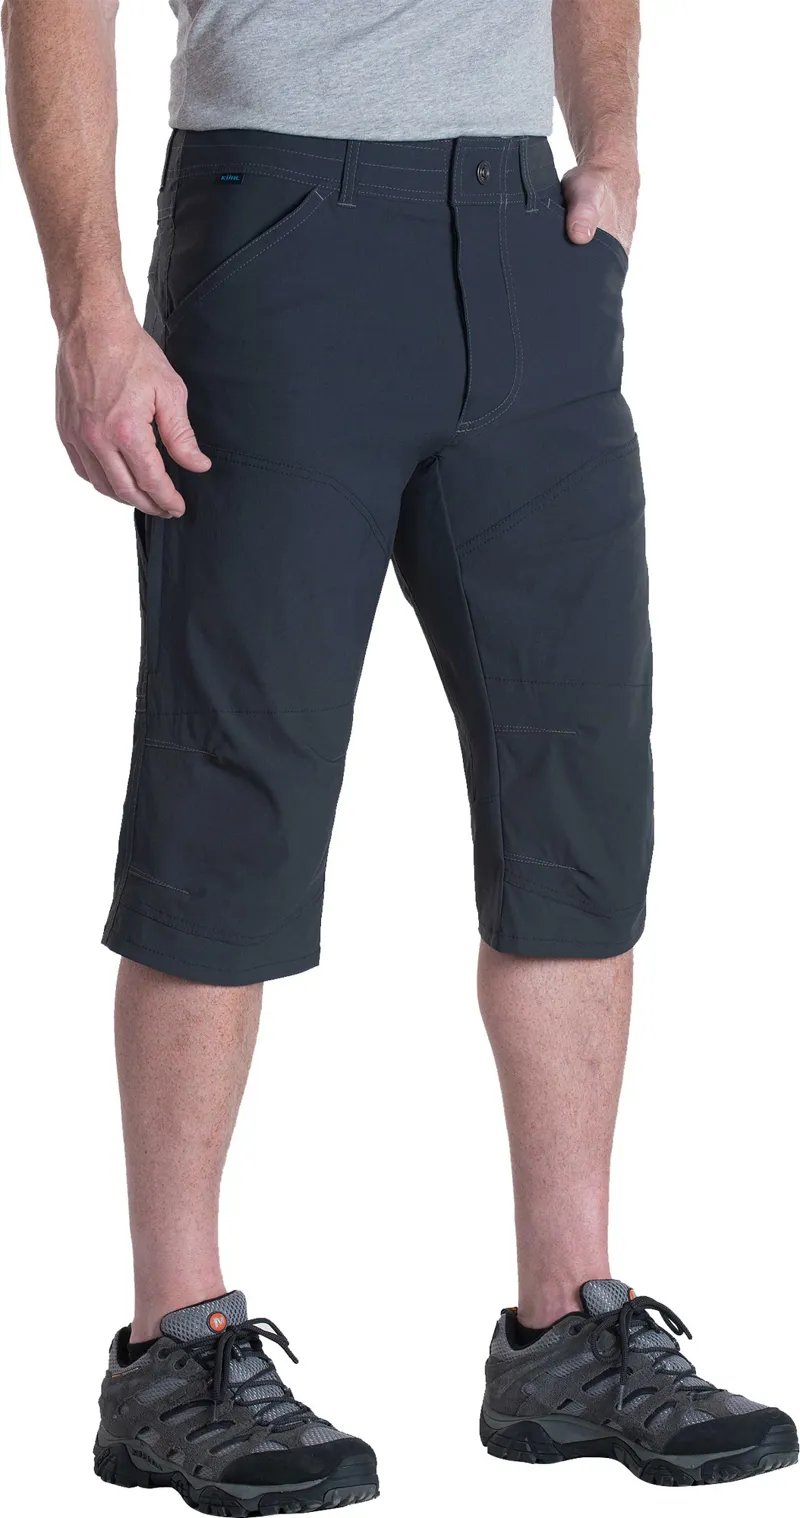 Buy > kuhl renegade krux shorts > in stock